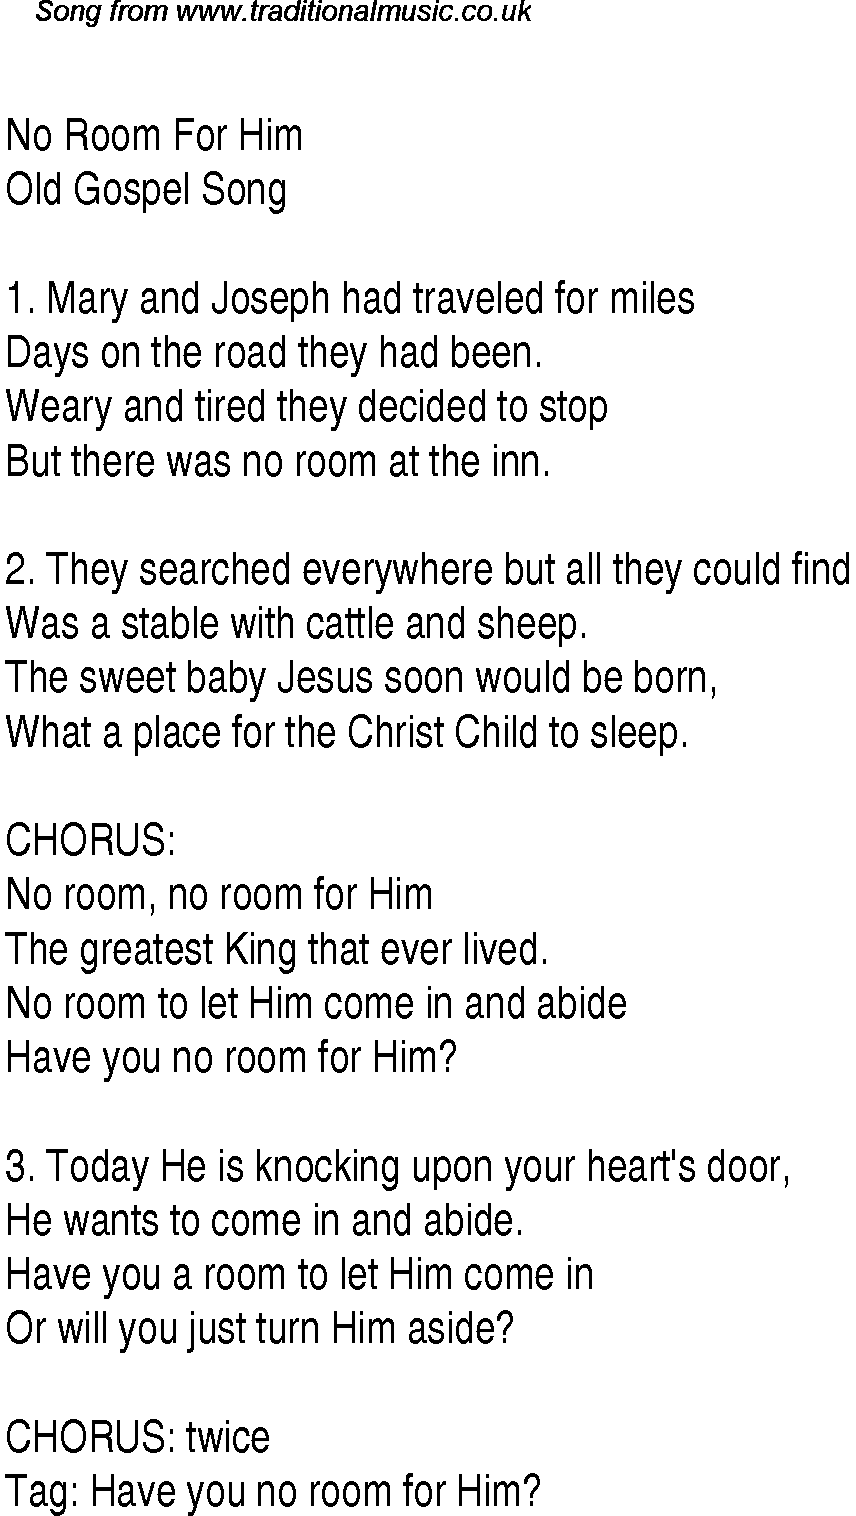 No Room For Him Christian Gospel Song Lyrics And Chords